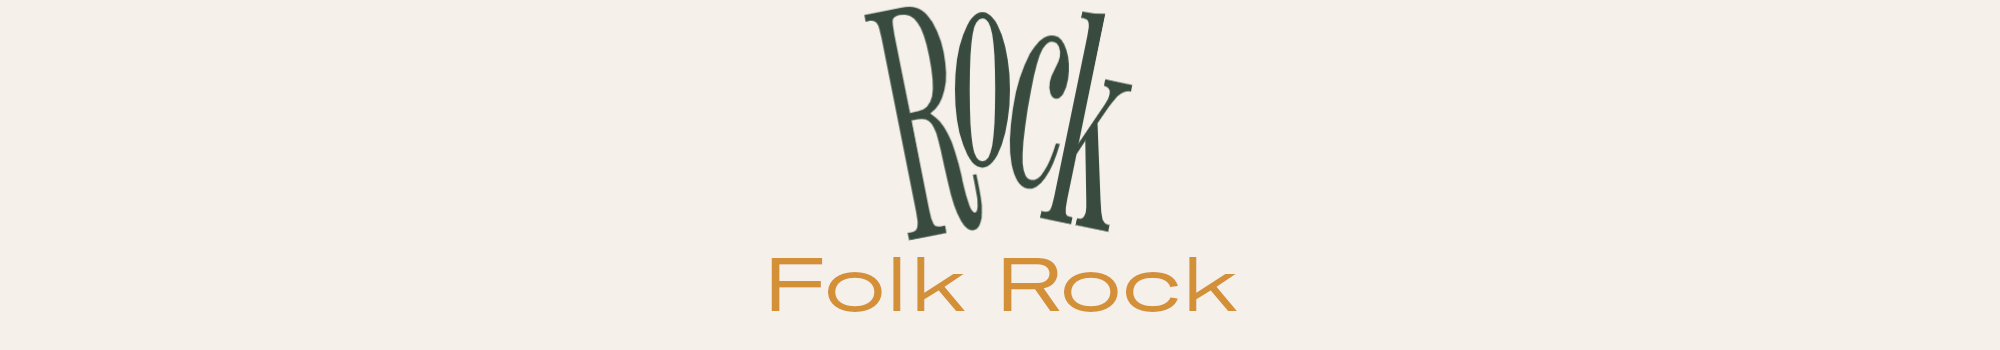 Rubrik till kategori: Rock - Folk Rock